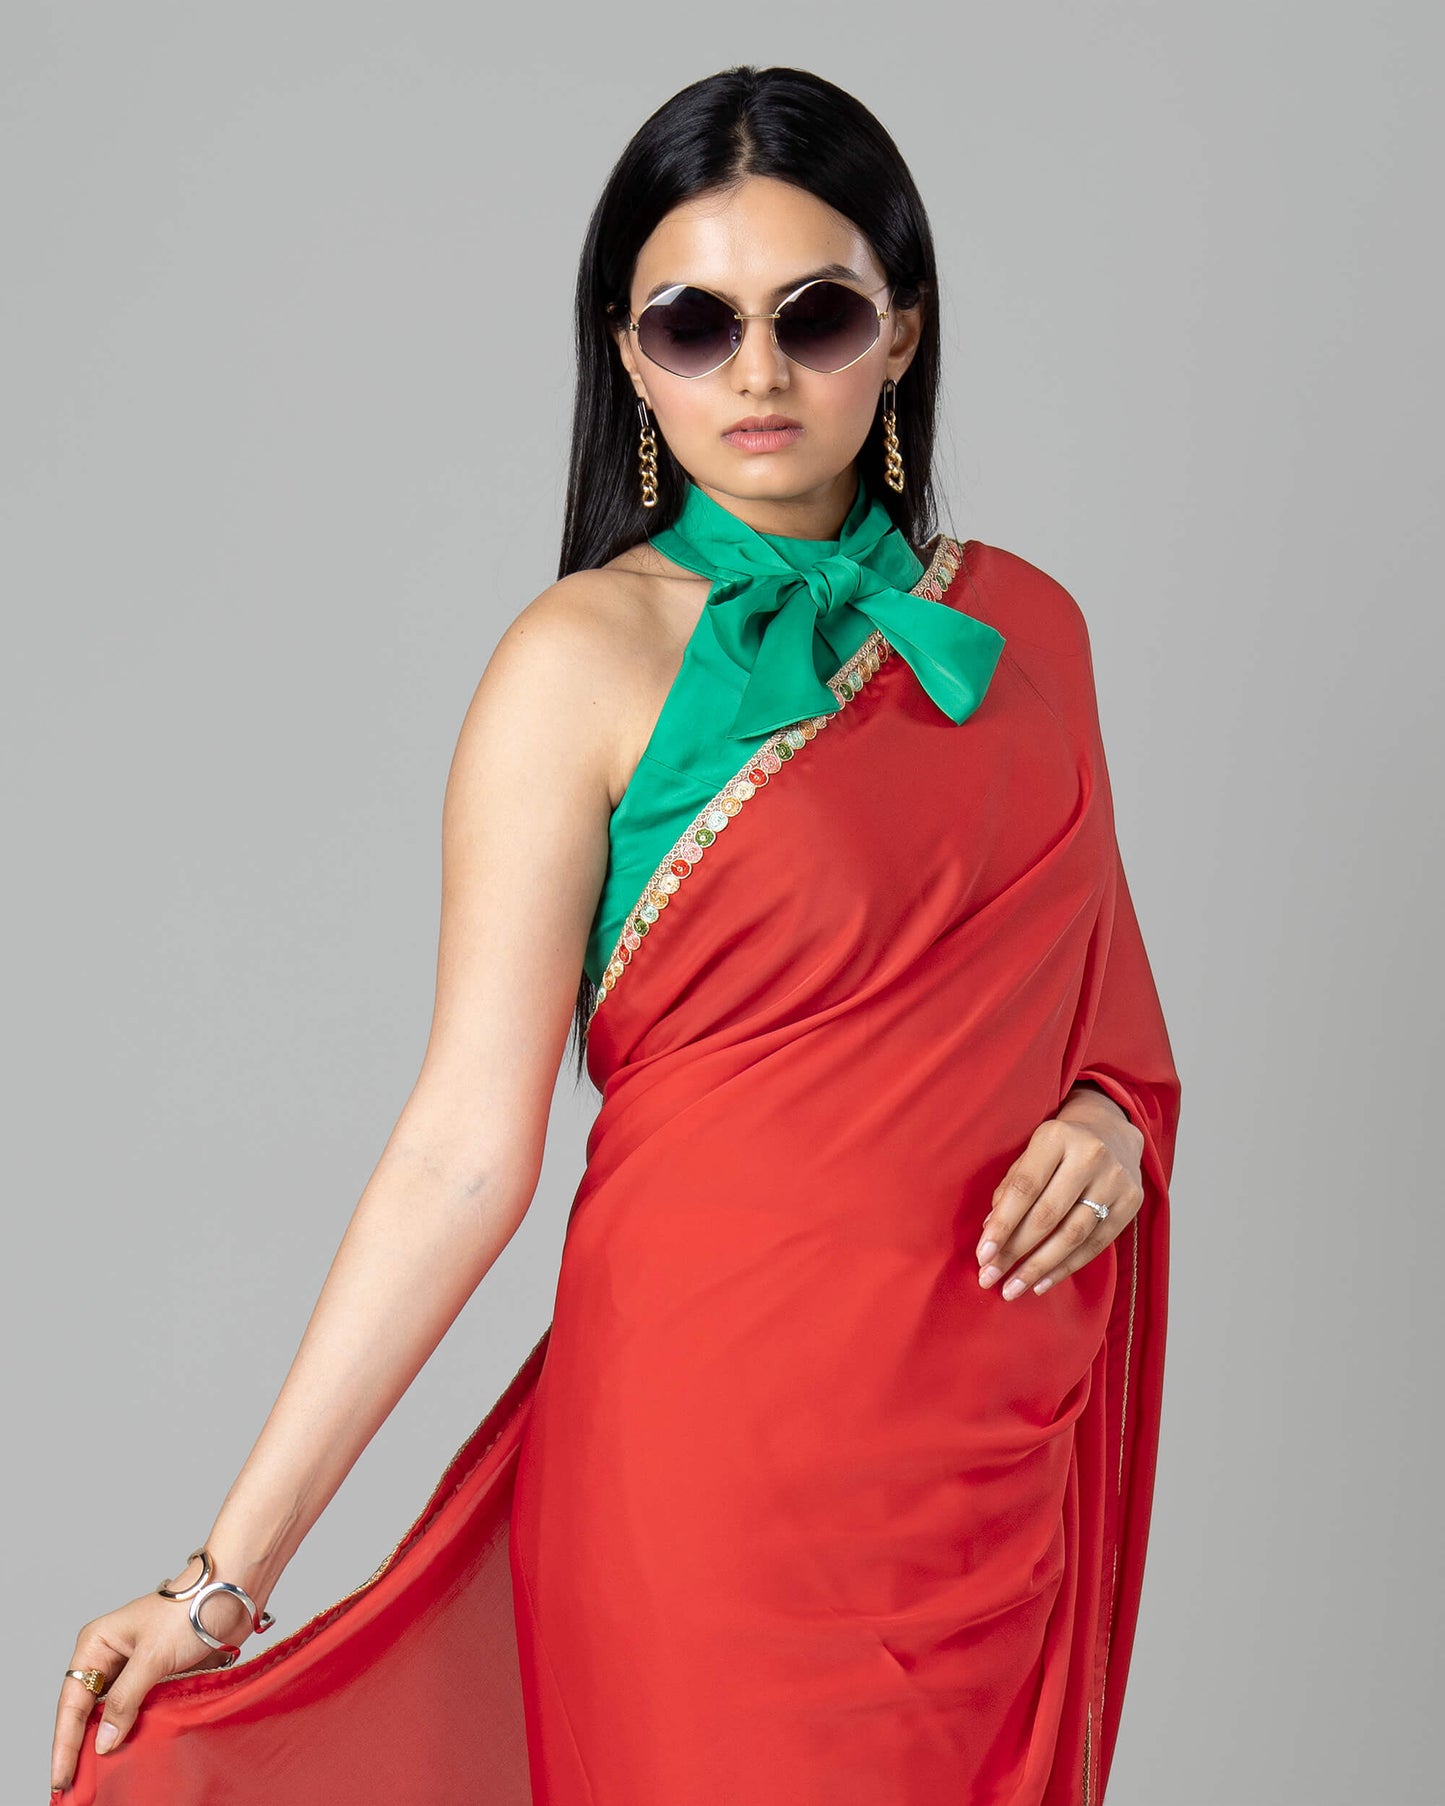 Exclusive Classic Women's Designer Bollywood Saree